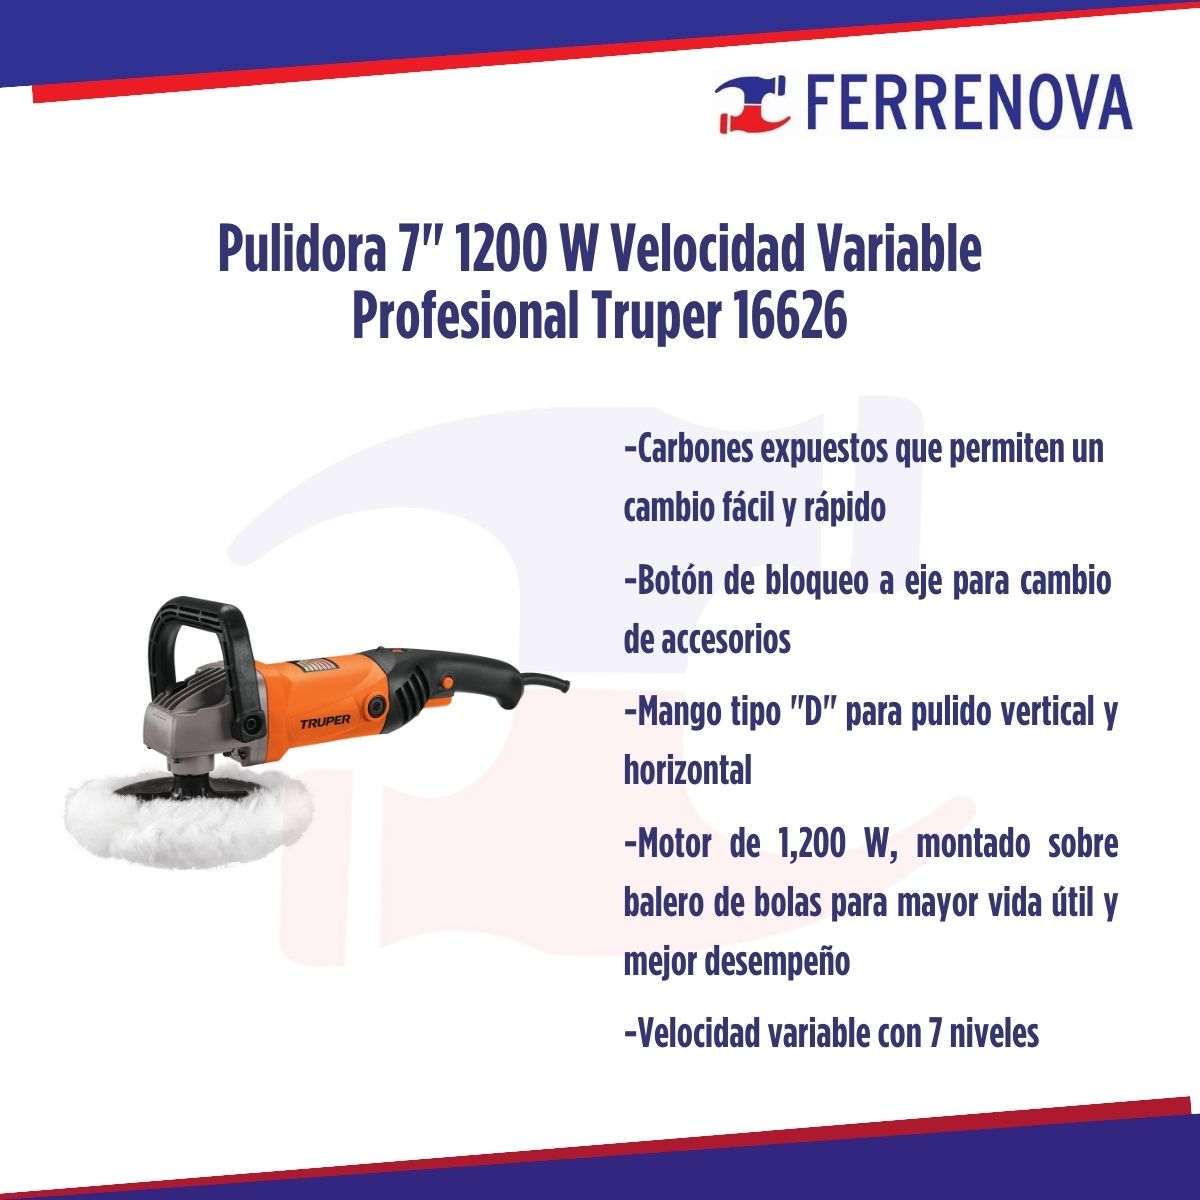 Pulidora 7" 1200 W Velocidad Variable Profesional Truper 16626